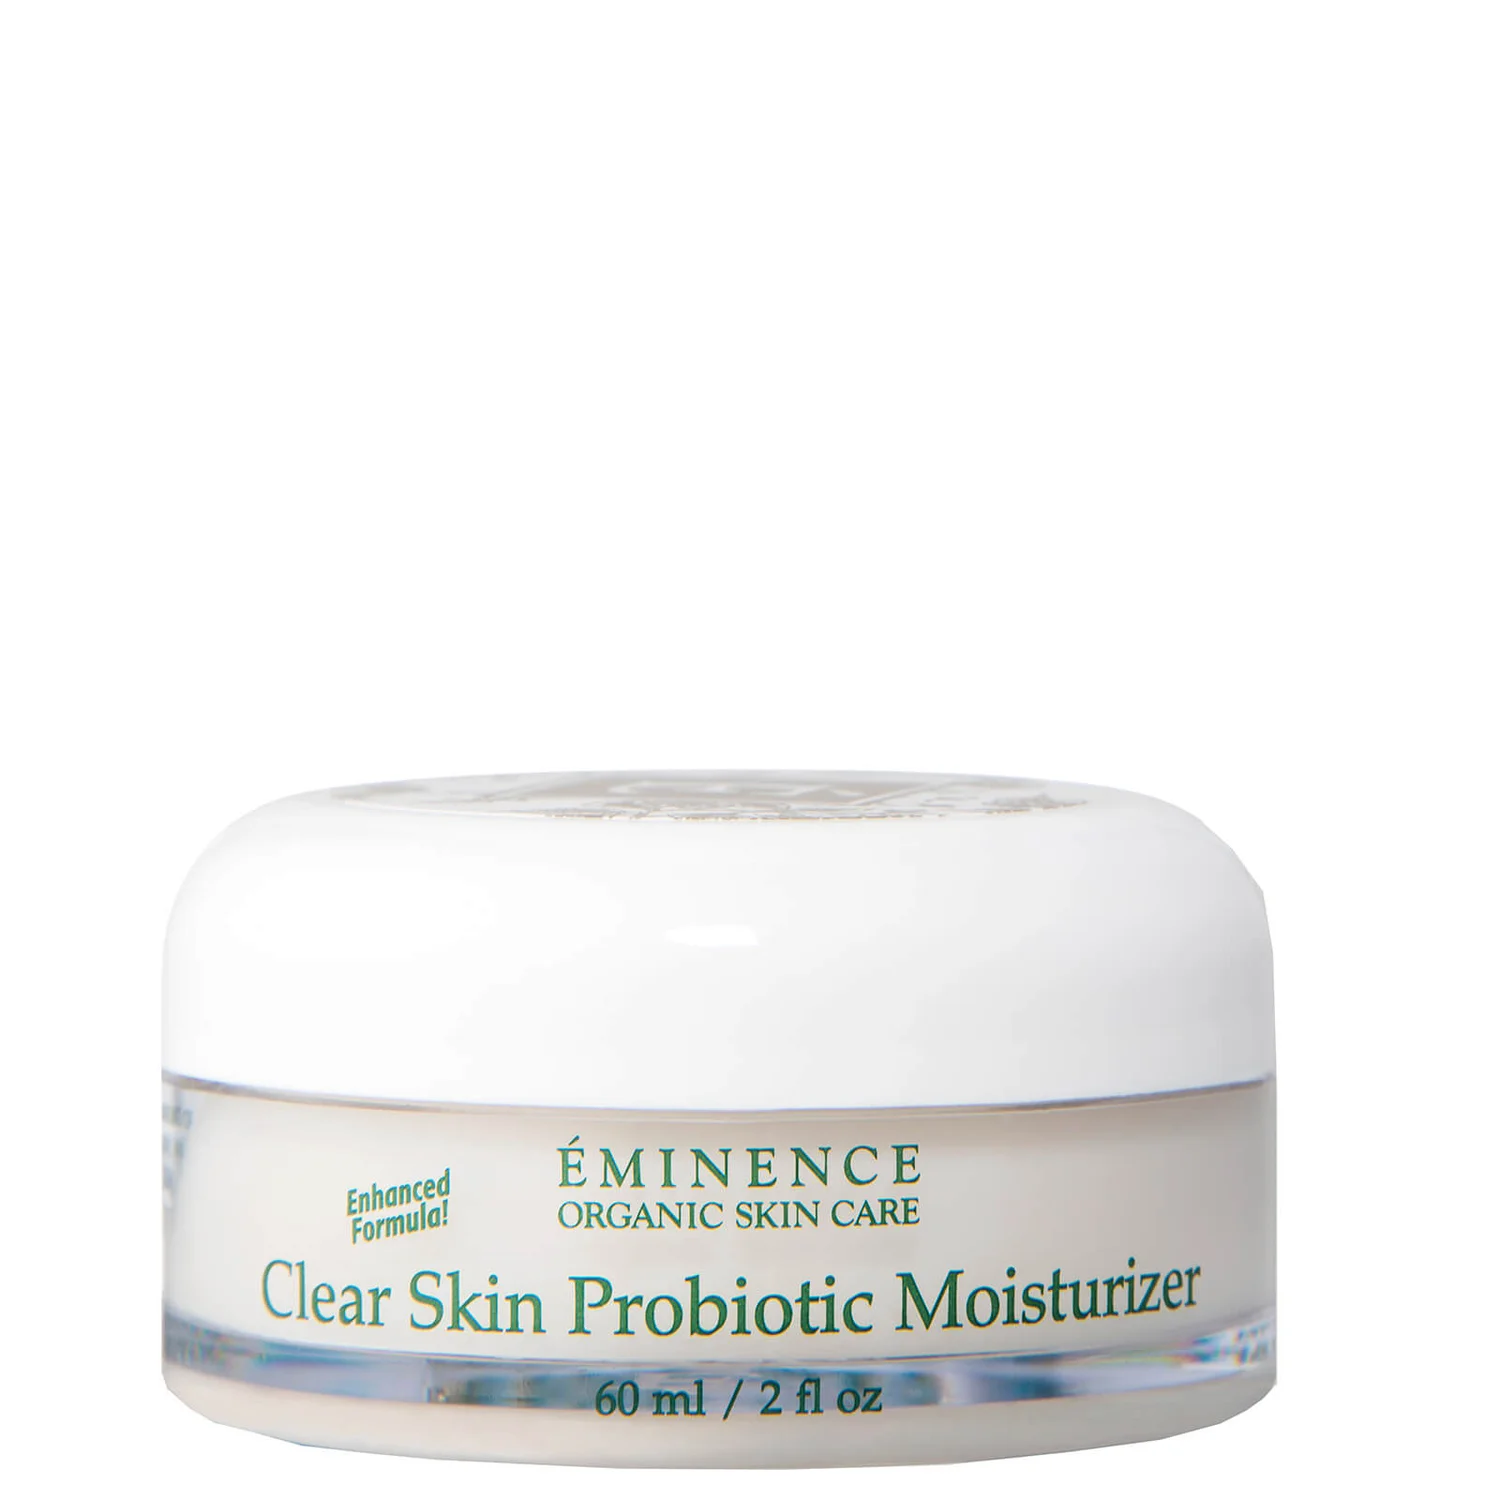 Eminence Organic Skin Care Clear Skin Probiotic Moisturizer 2 fl. oz